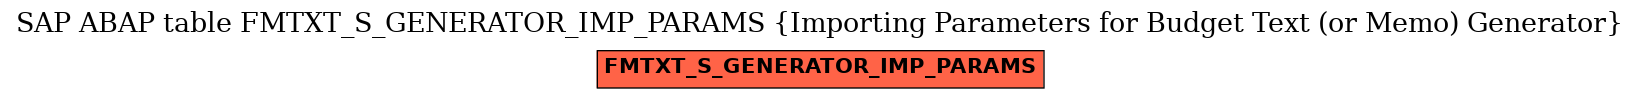 E-R Diagram for table FMTXT_S_GENERATOR_IMP_PARAMS (Importing Parameters for Budget Text (or Memo) Generator)